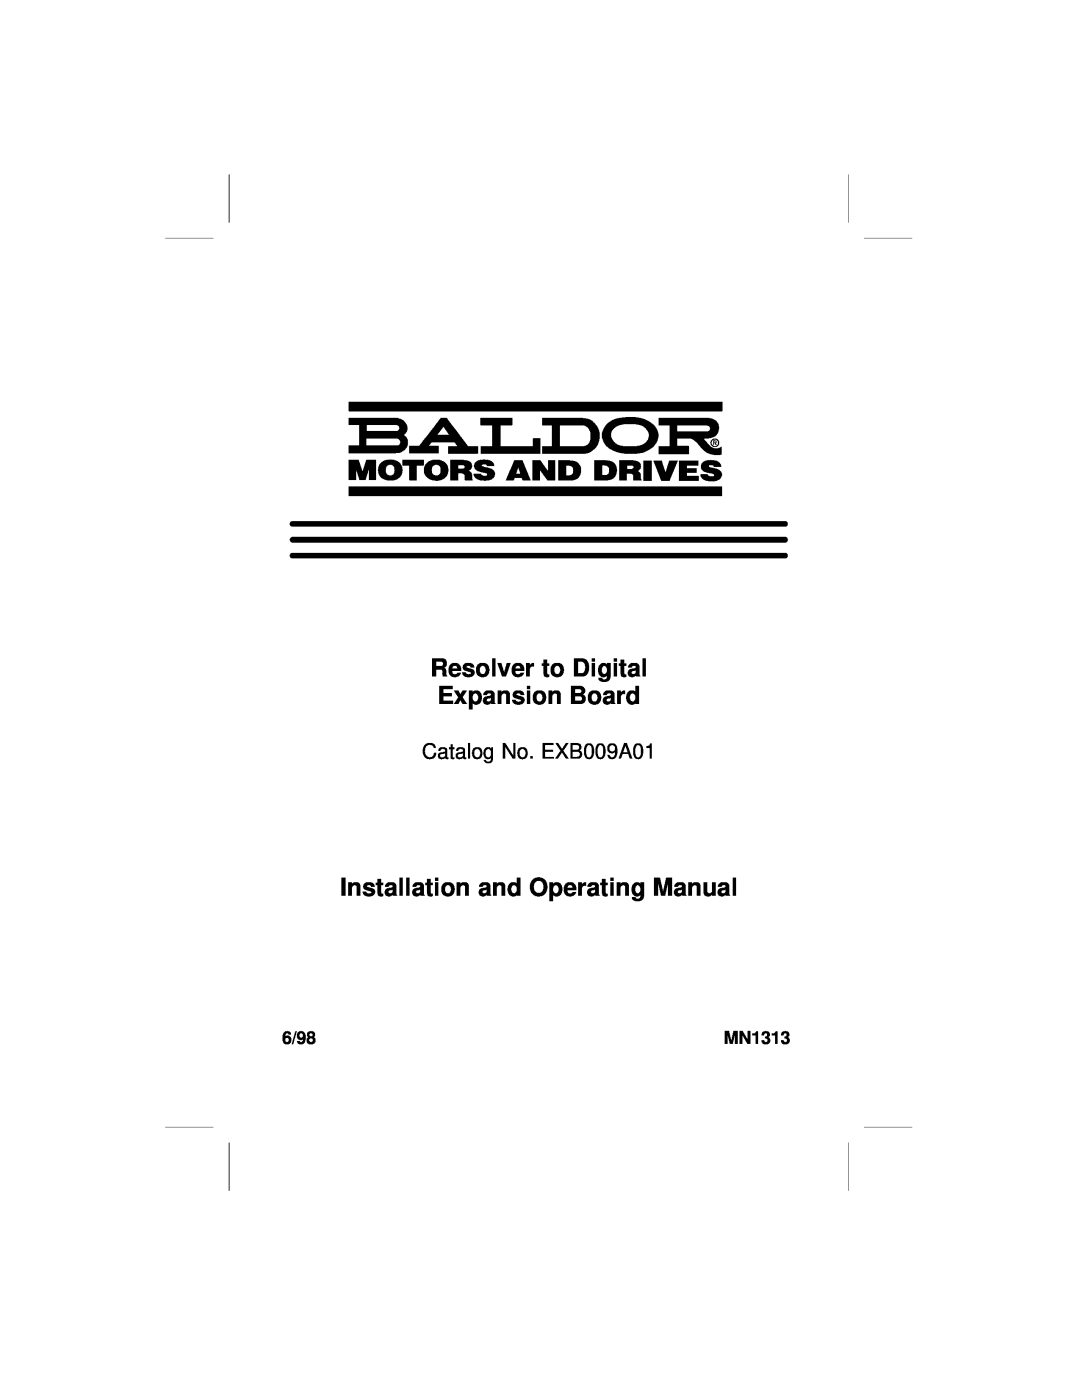 Baldor Resolver to Digital Expansion Board manual Installation and Operating Manual, Catalog No. EXB009A01 